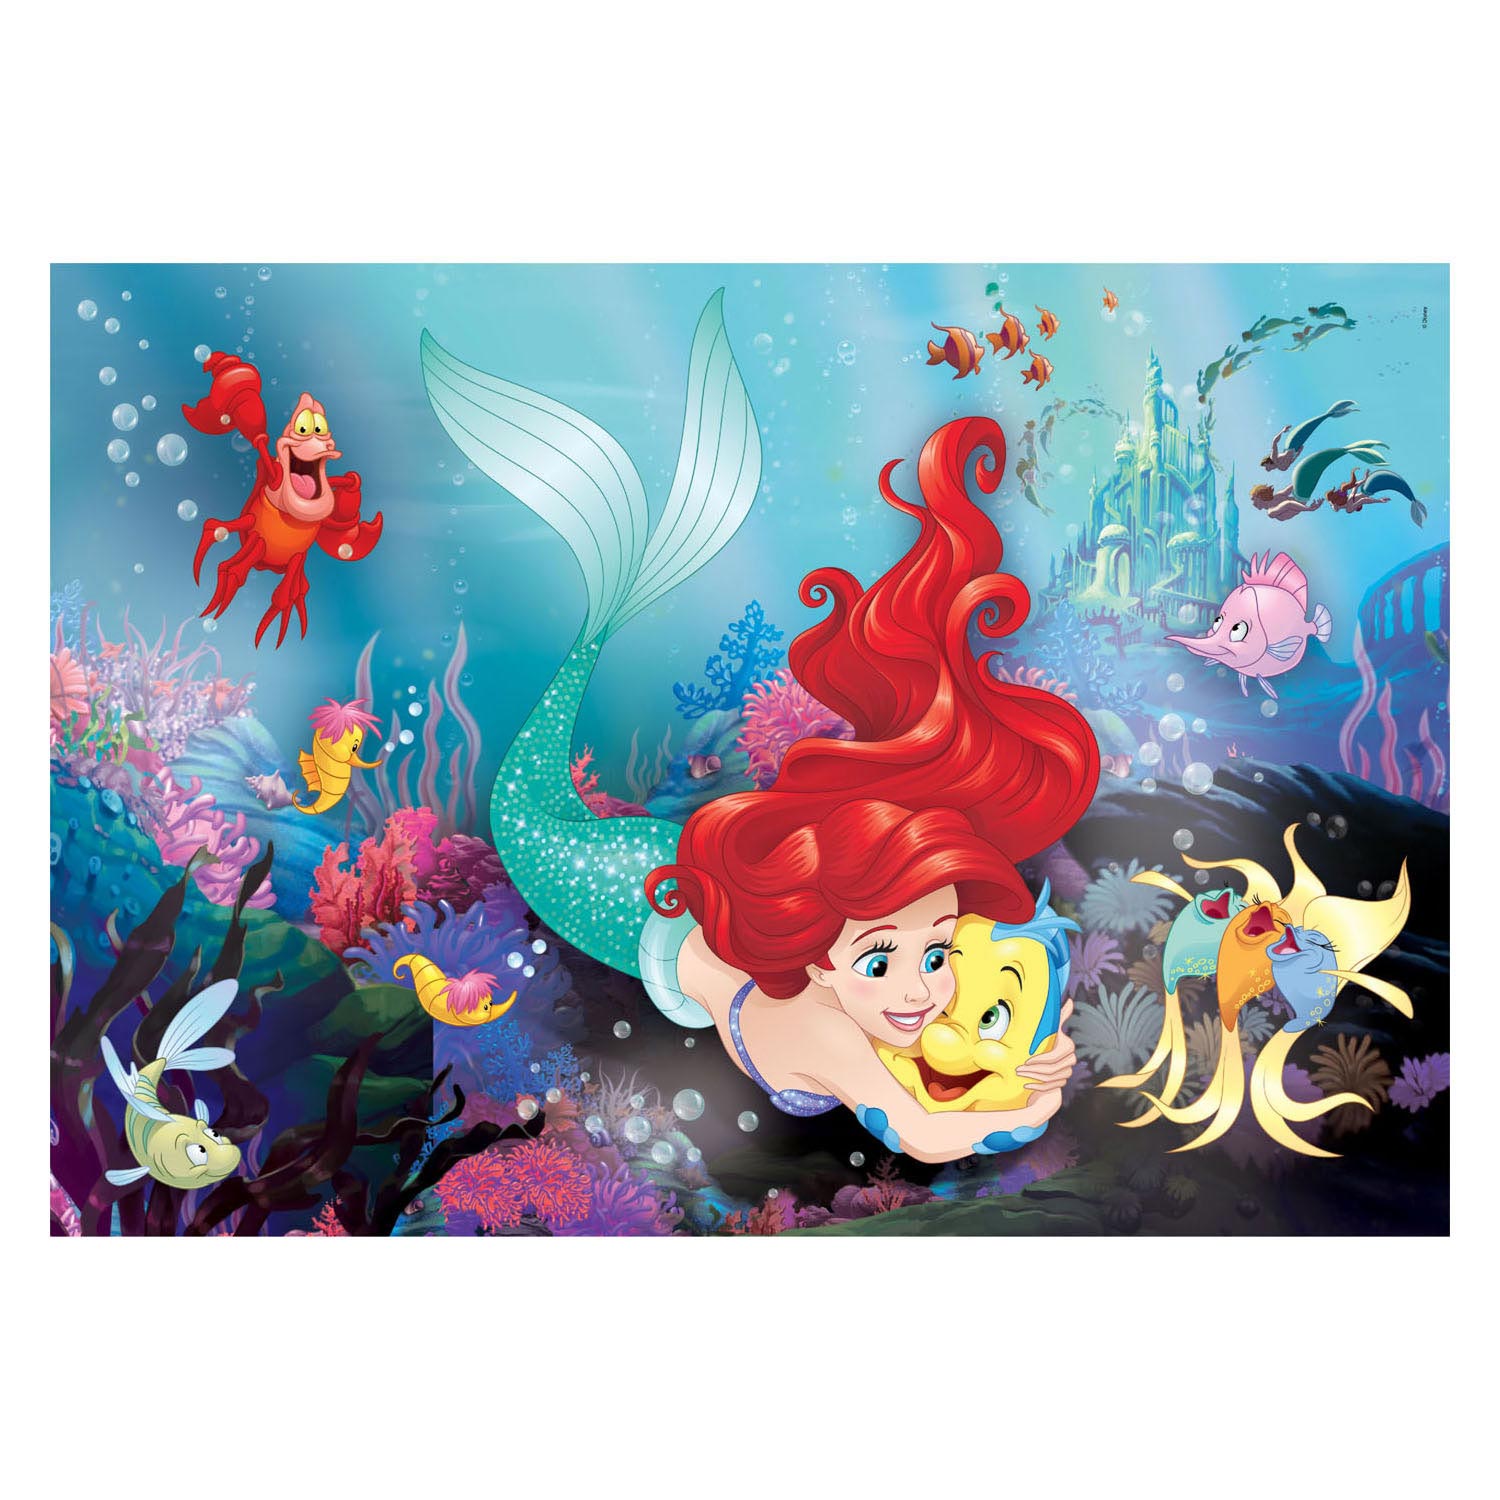 Clementoni Maxi Puzzle Disney Petite Mermaid, 24 pcs.